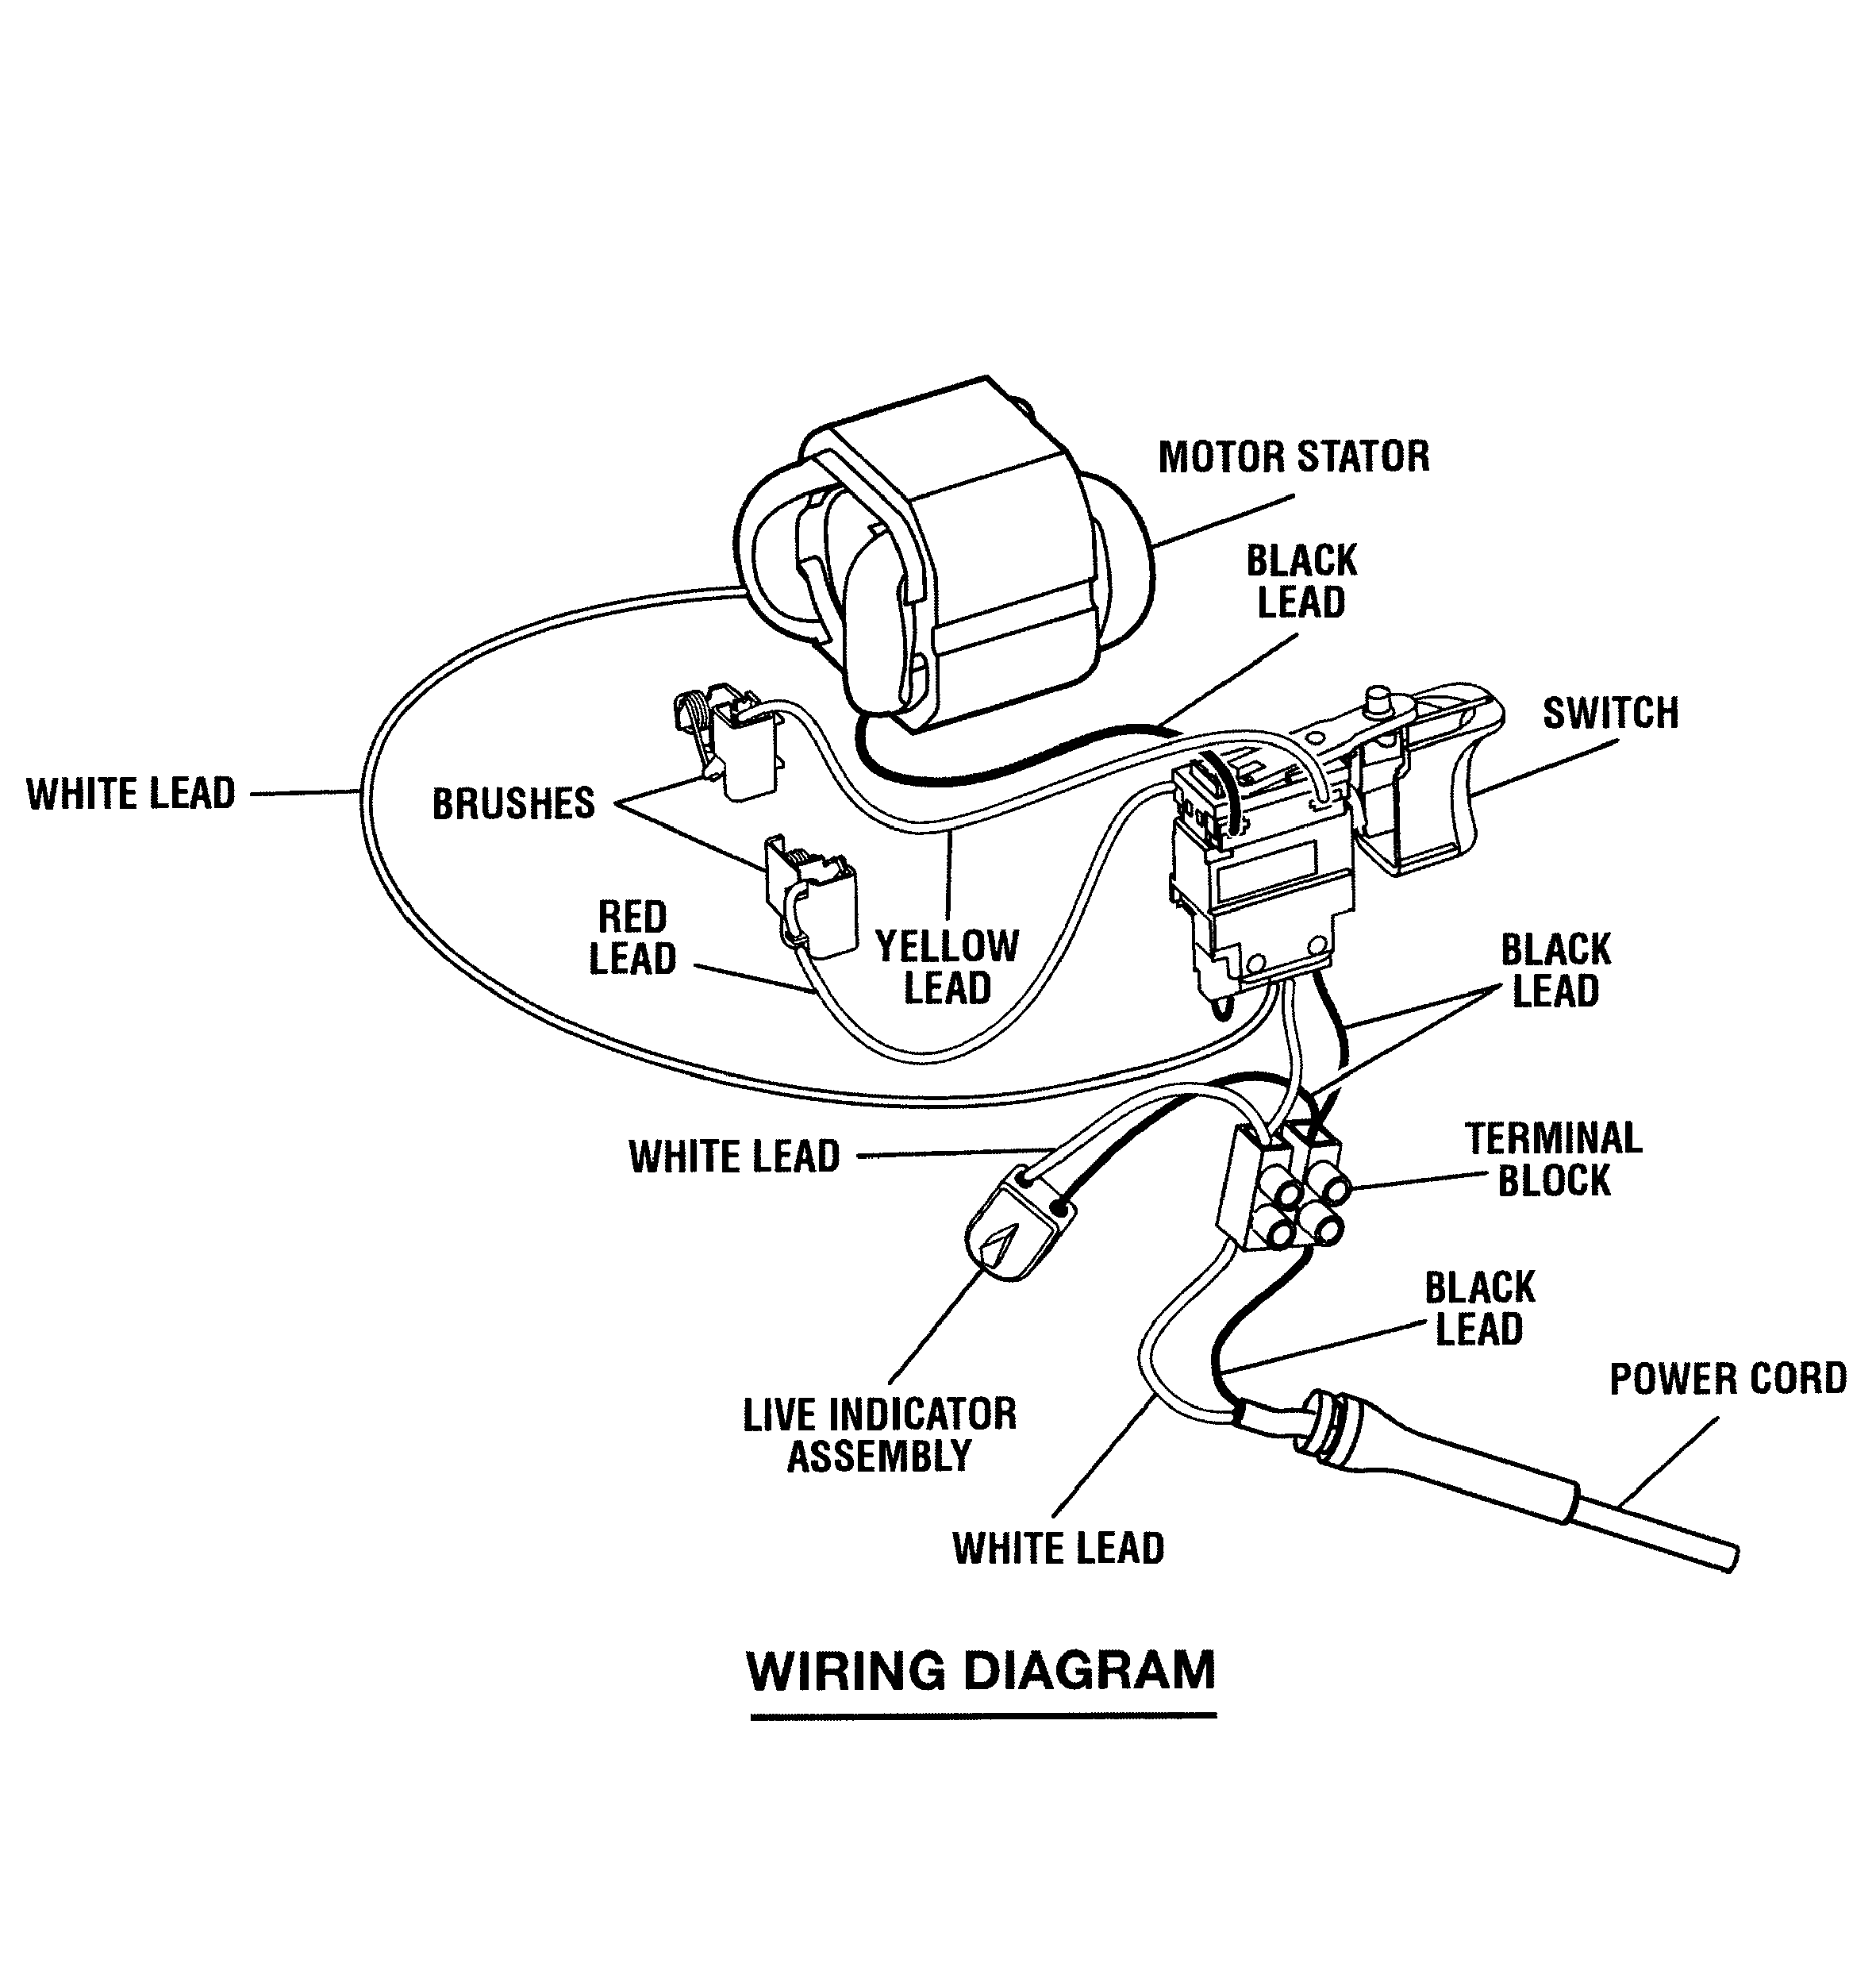 Motor Wire Diagram For Craftsman - Wiring Diagram